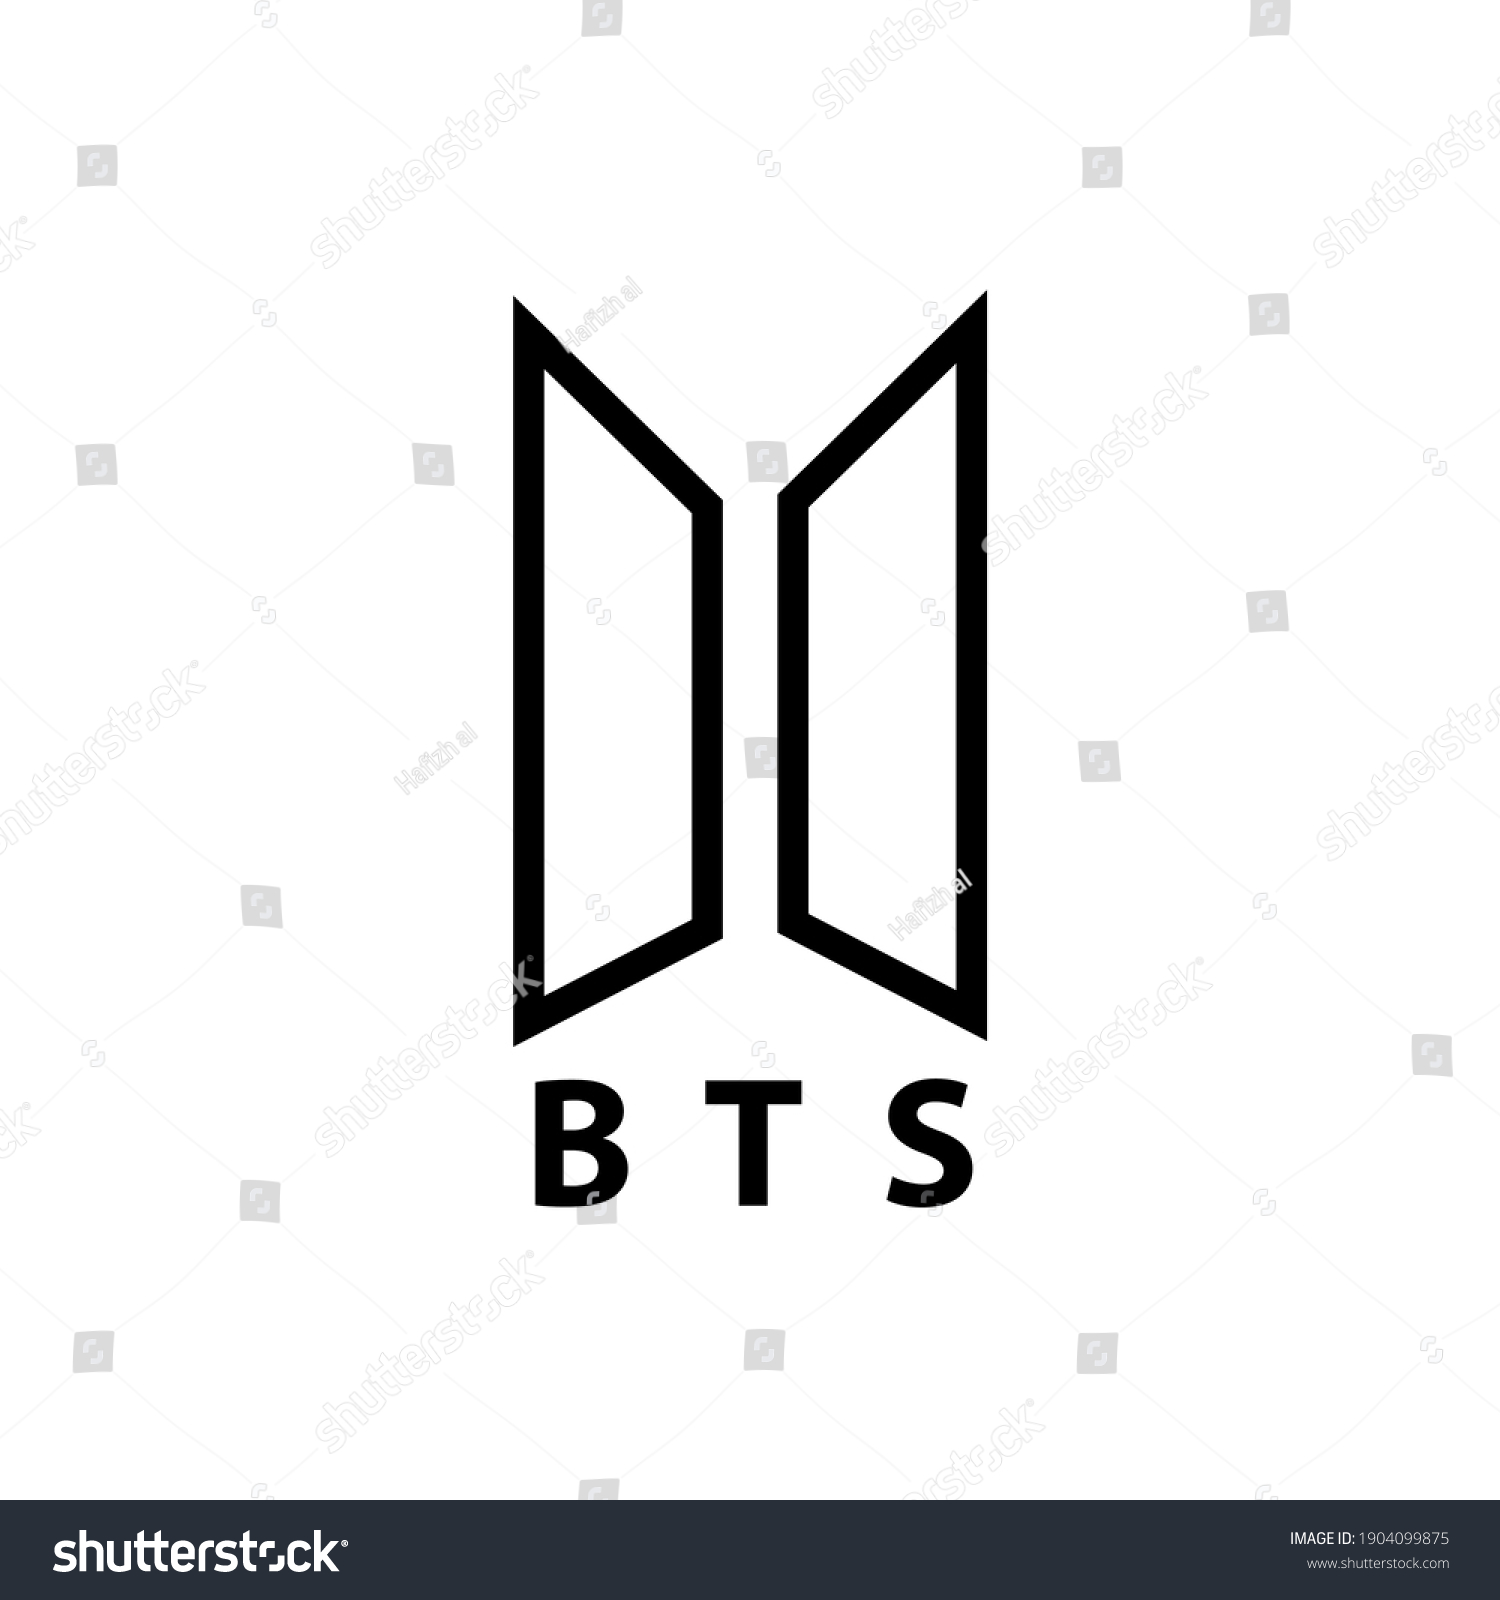 SVG of Logo BTS ,Bangtan Boys , new logo on white background. simple design for graphics, logos, websites, social media, UI, mobile apps, EPS10 svg